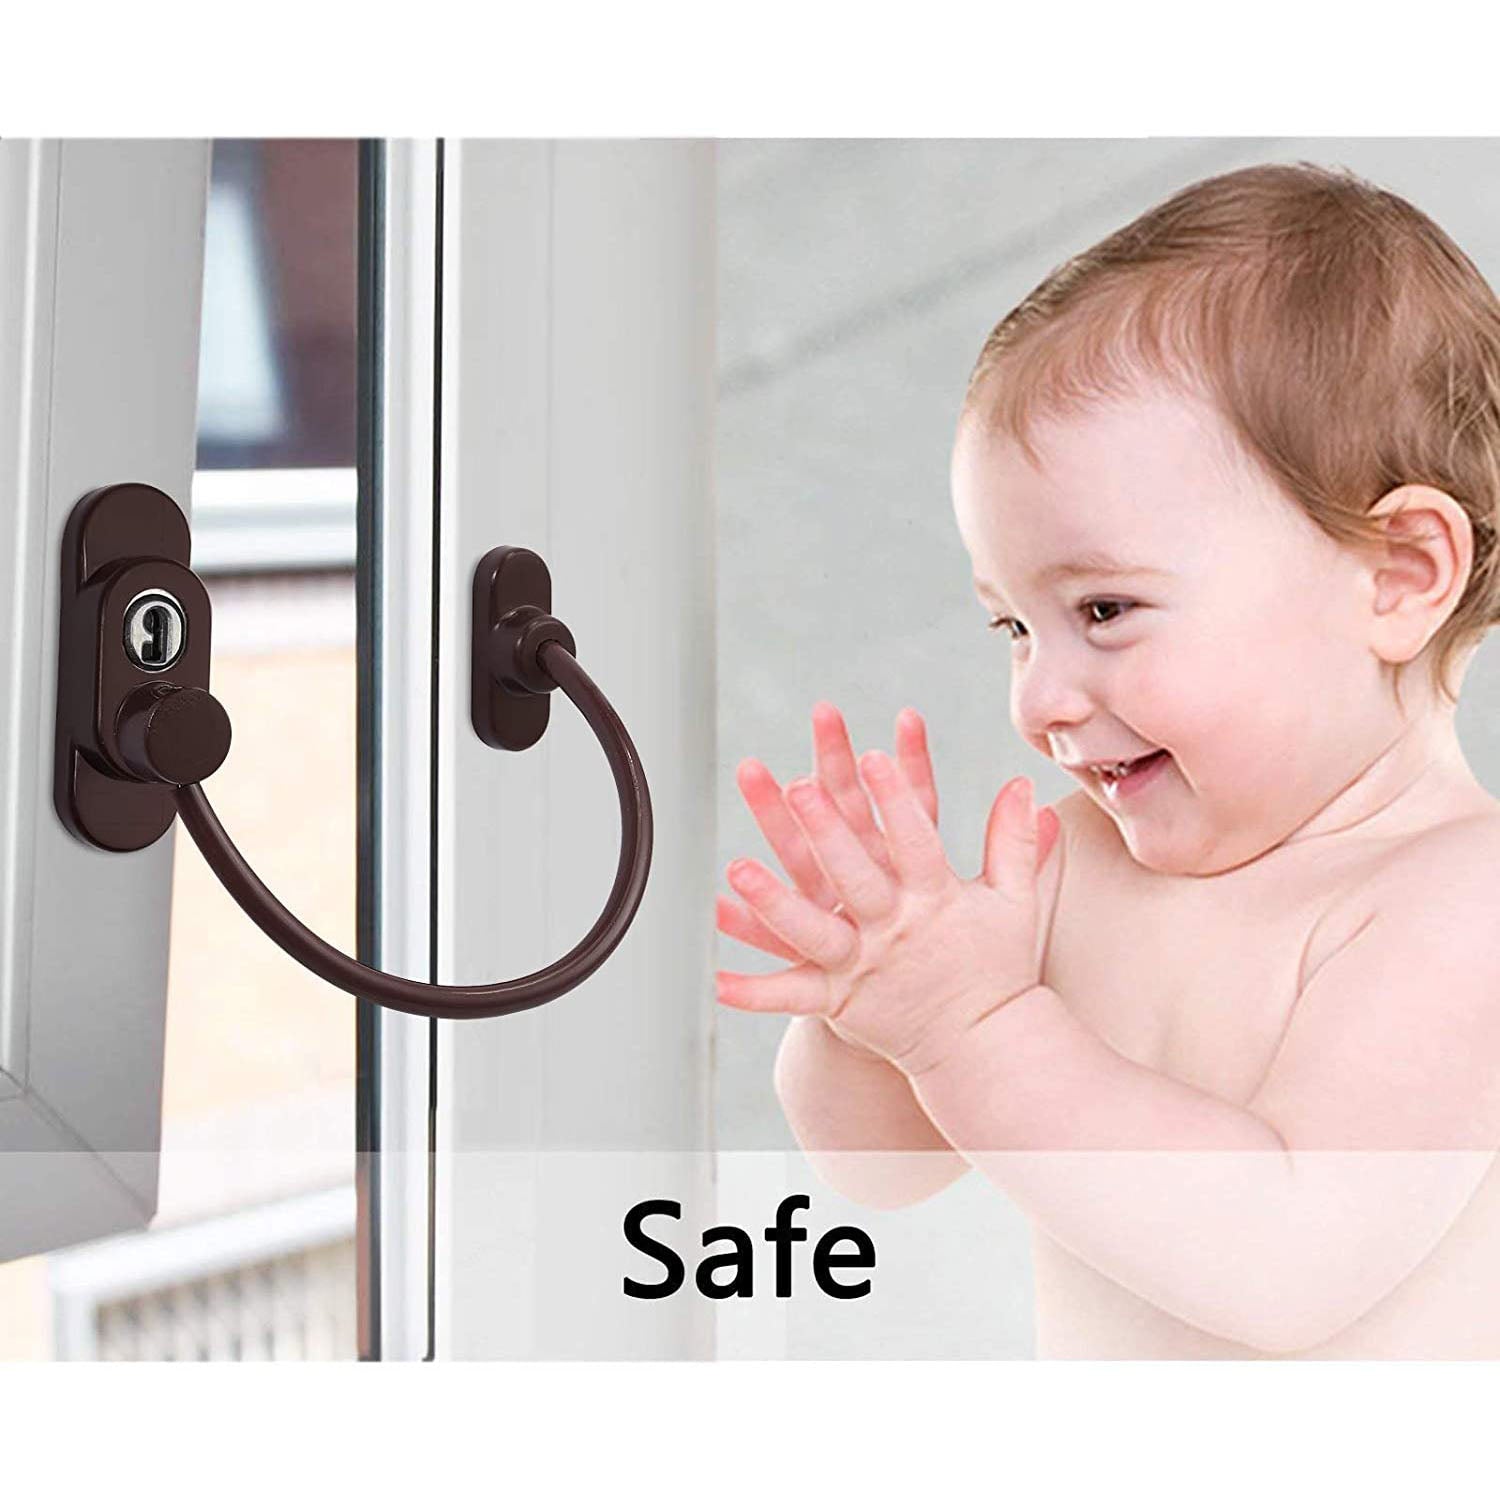 Kamtop Window Restrictor Locks 4 Packs Security Cable